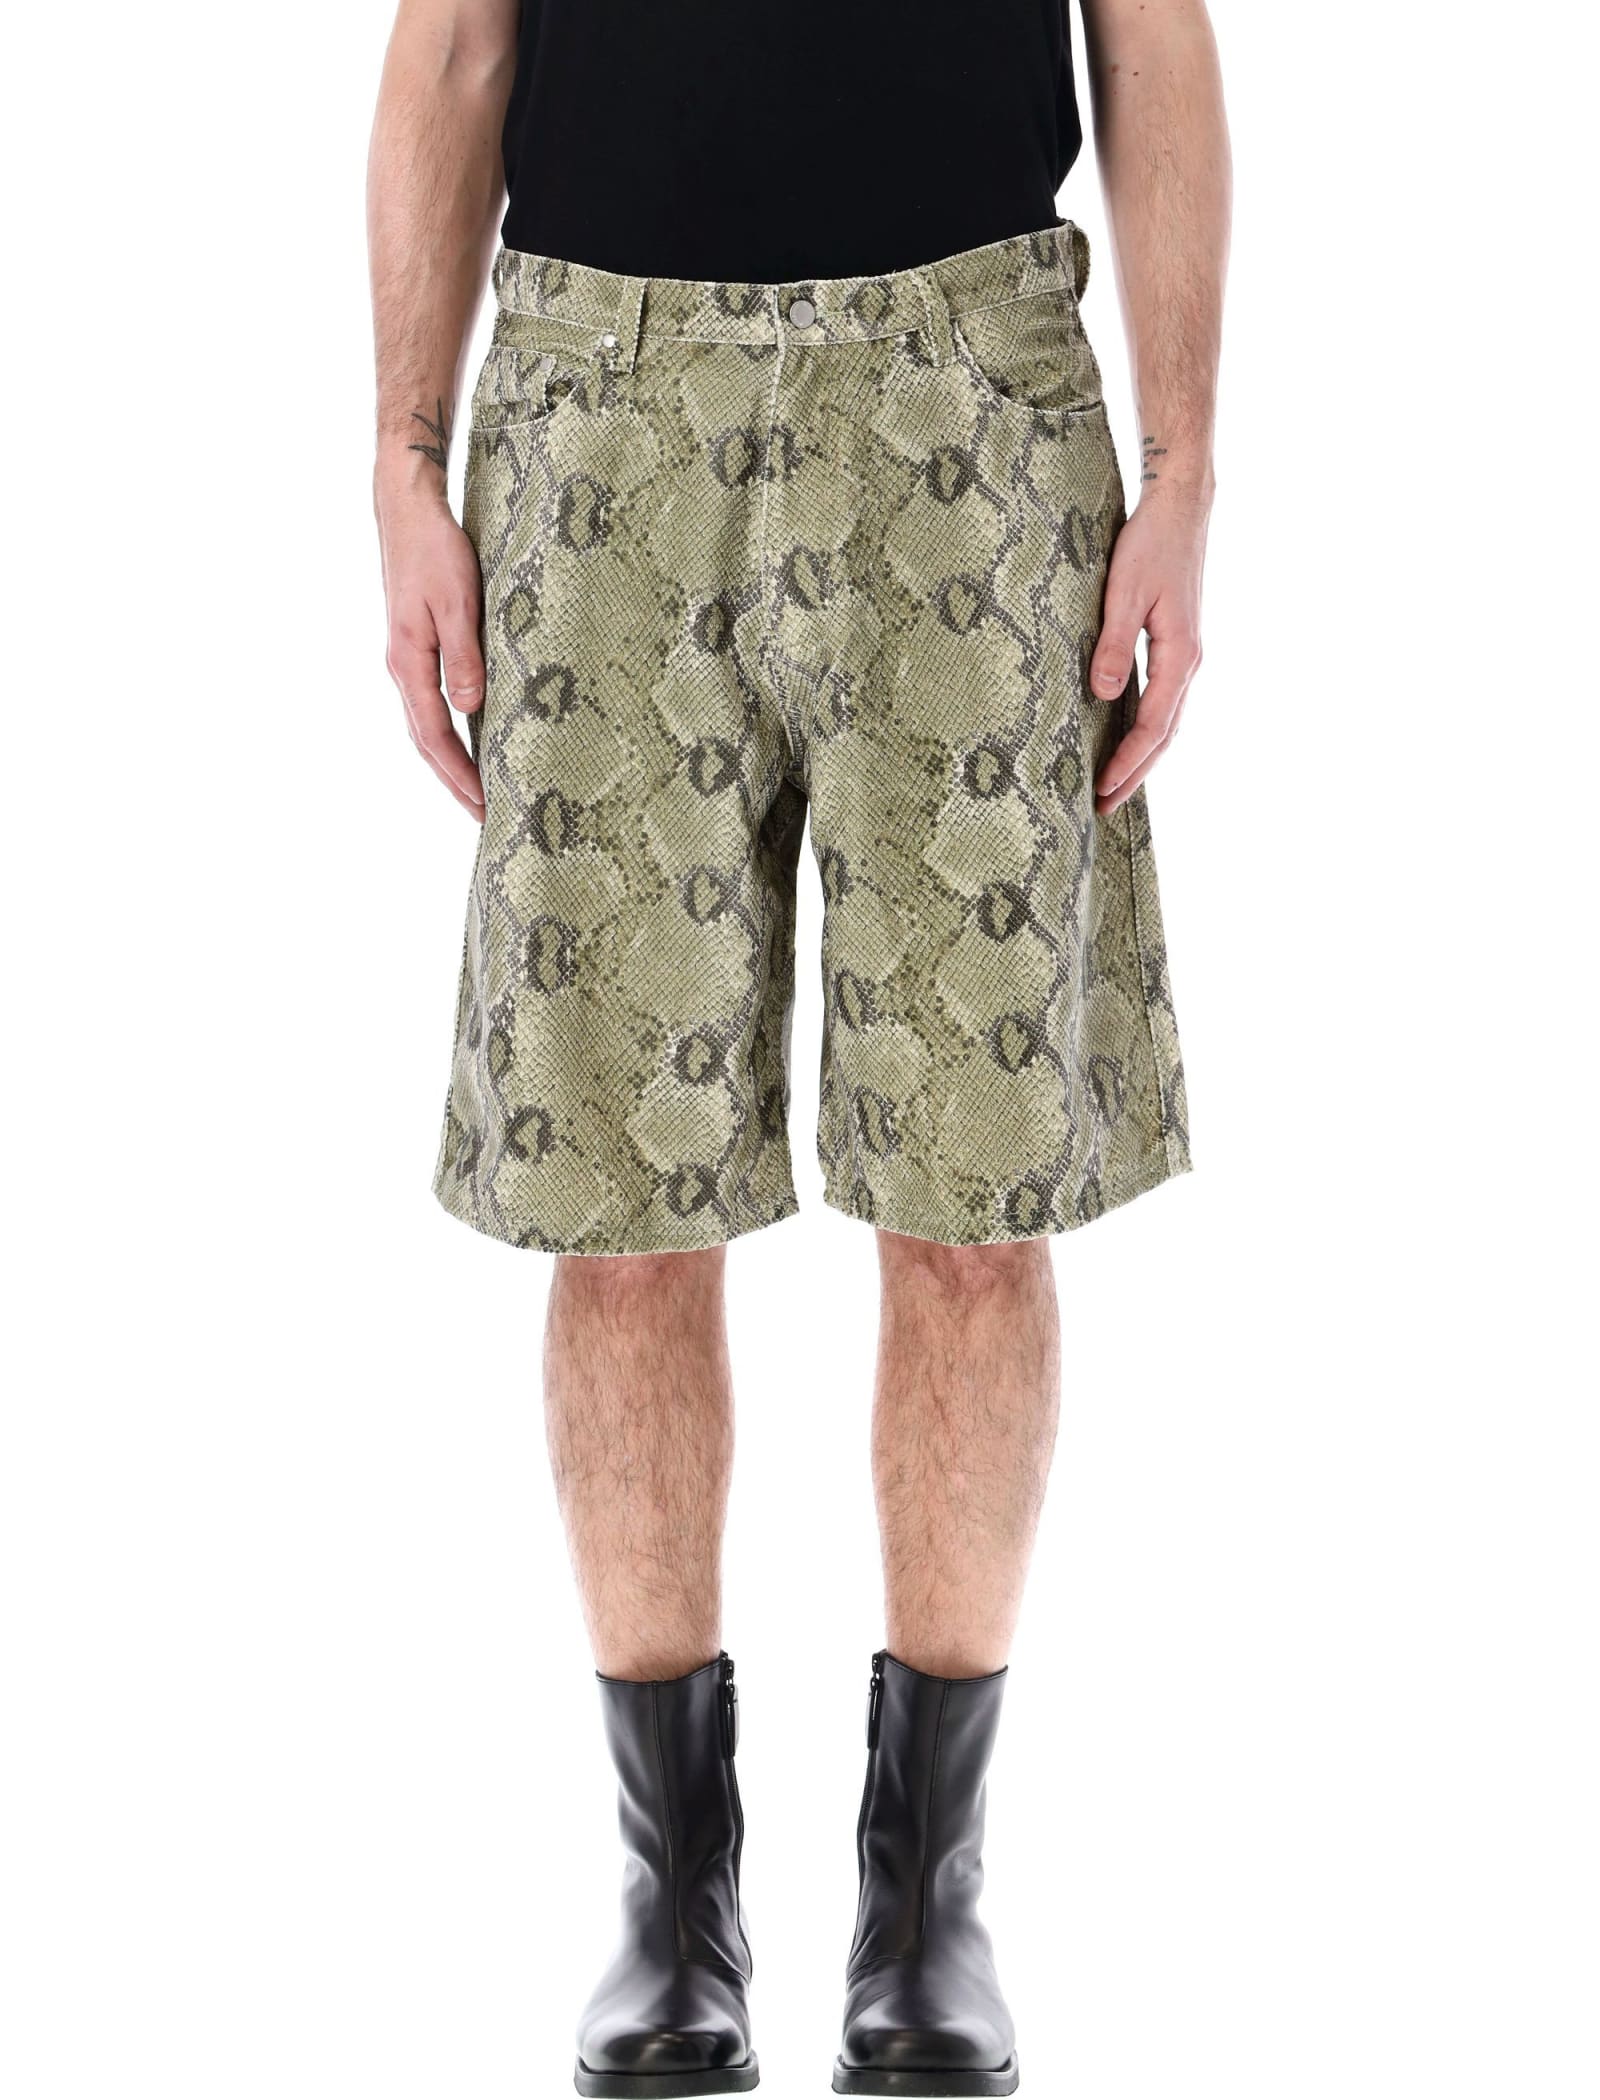 Rattle Shorts